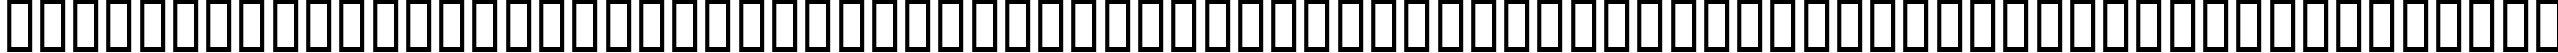 Пример написания английского алфавита шрифтом BD Geminis